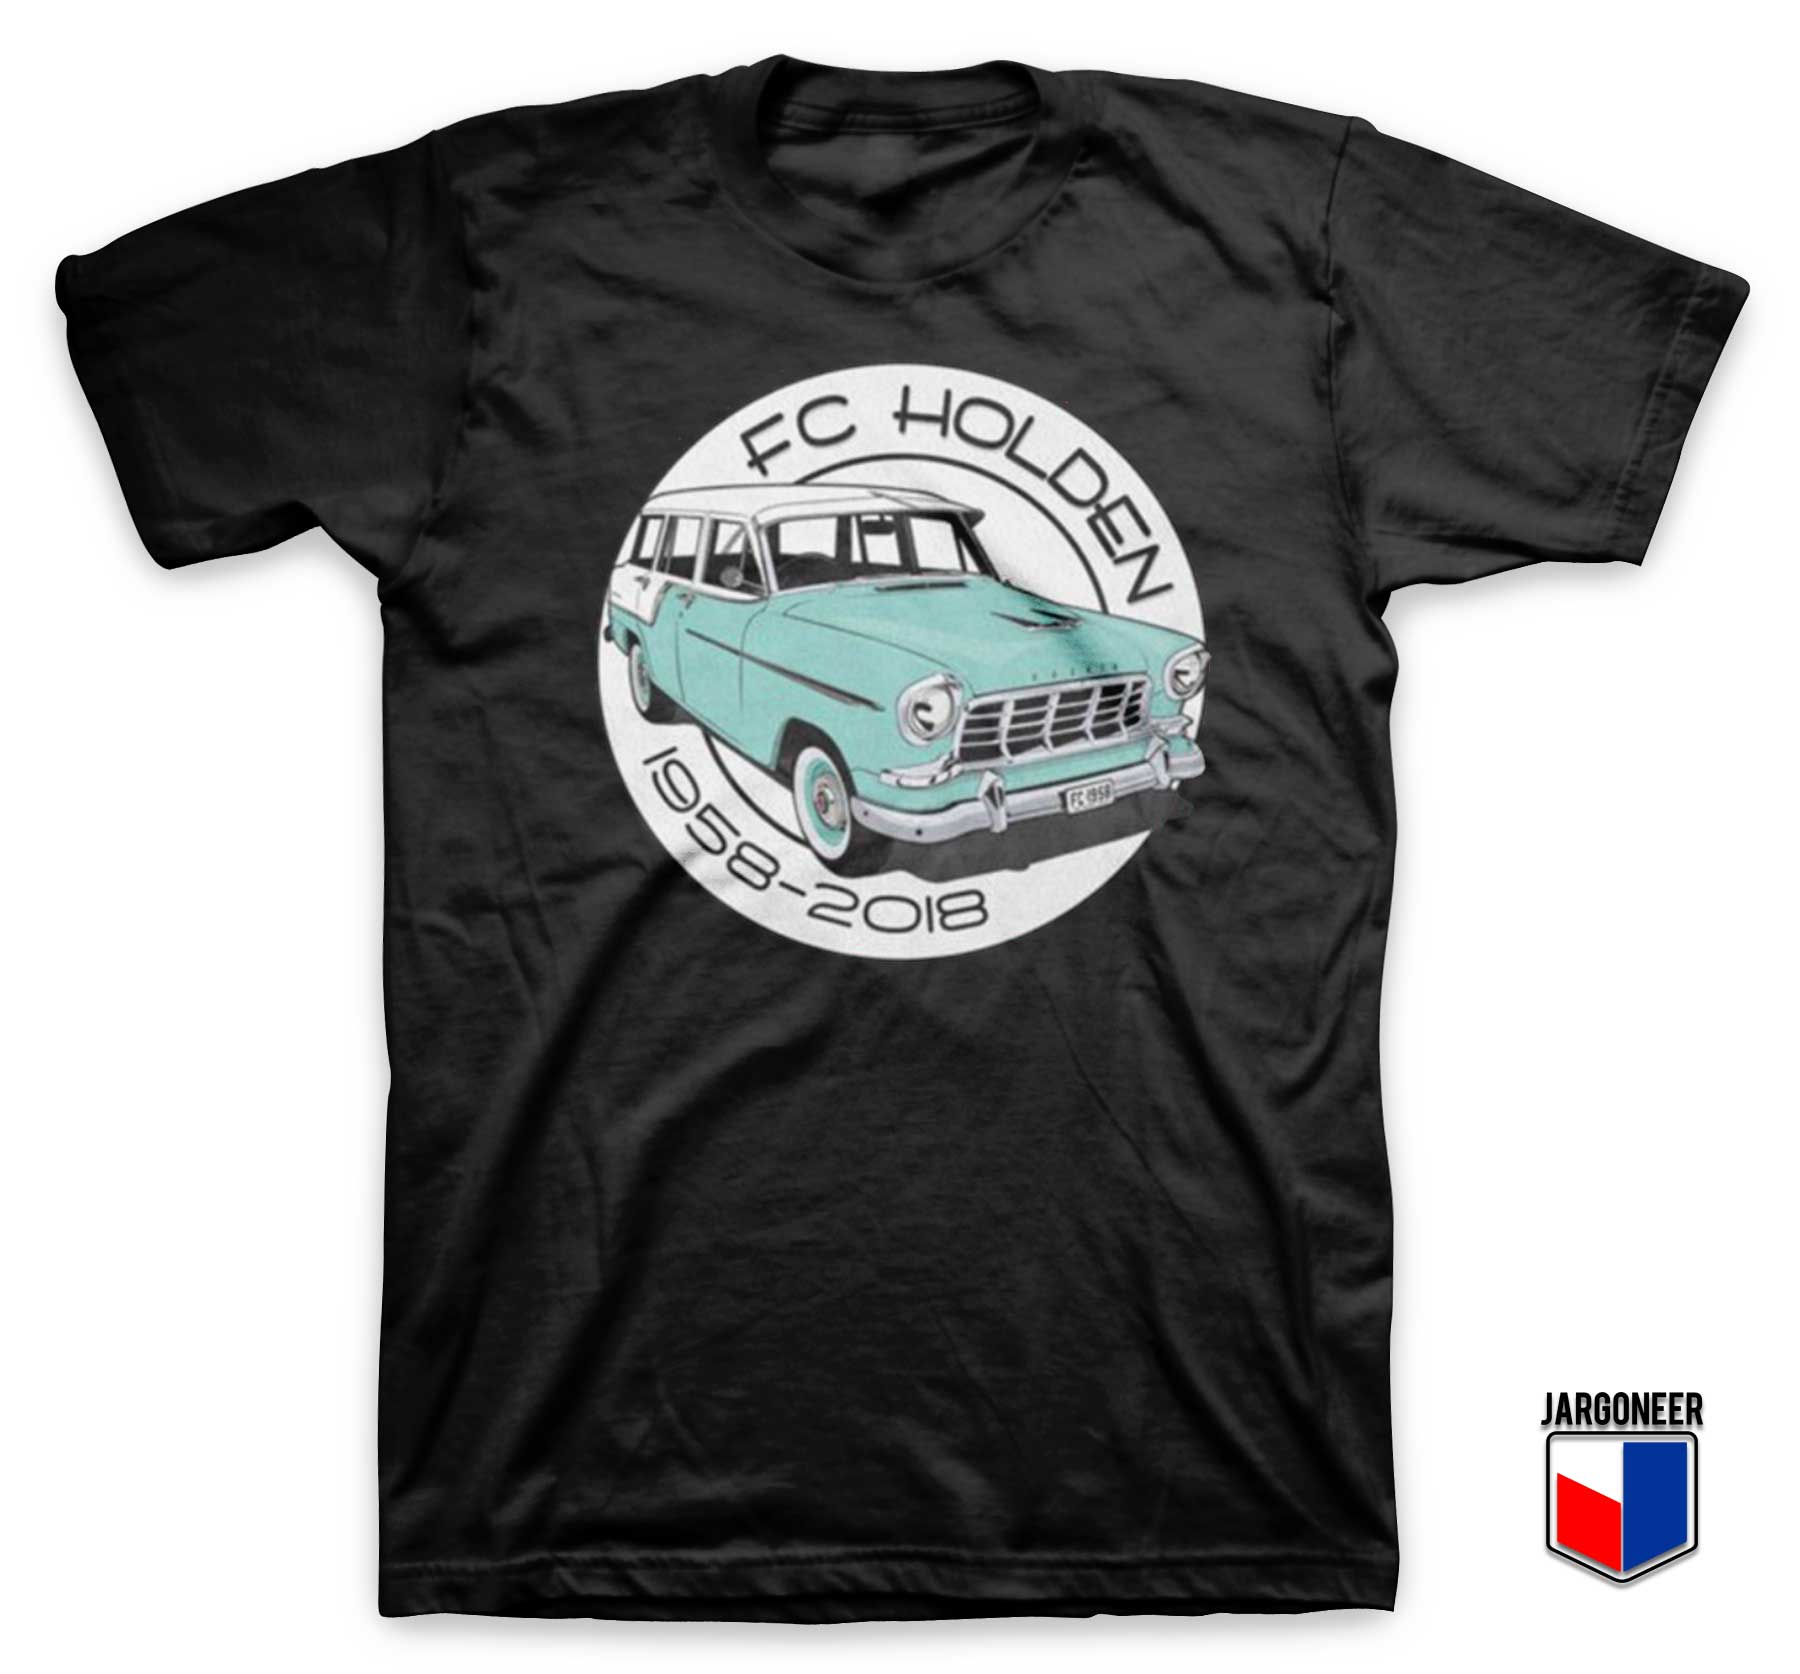 Fe Holden Motor Series T Shirt - Shop Unique Graphic Cool Shirt Designs